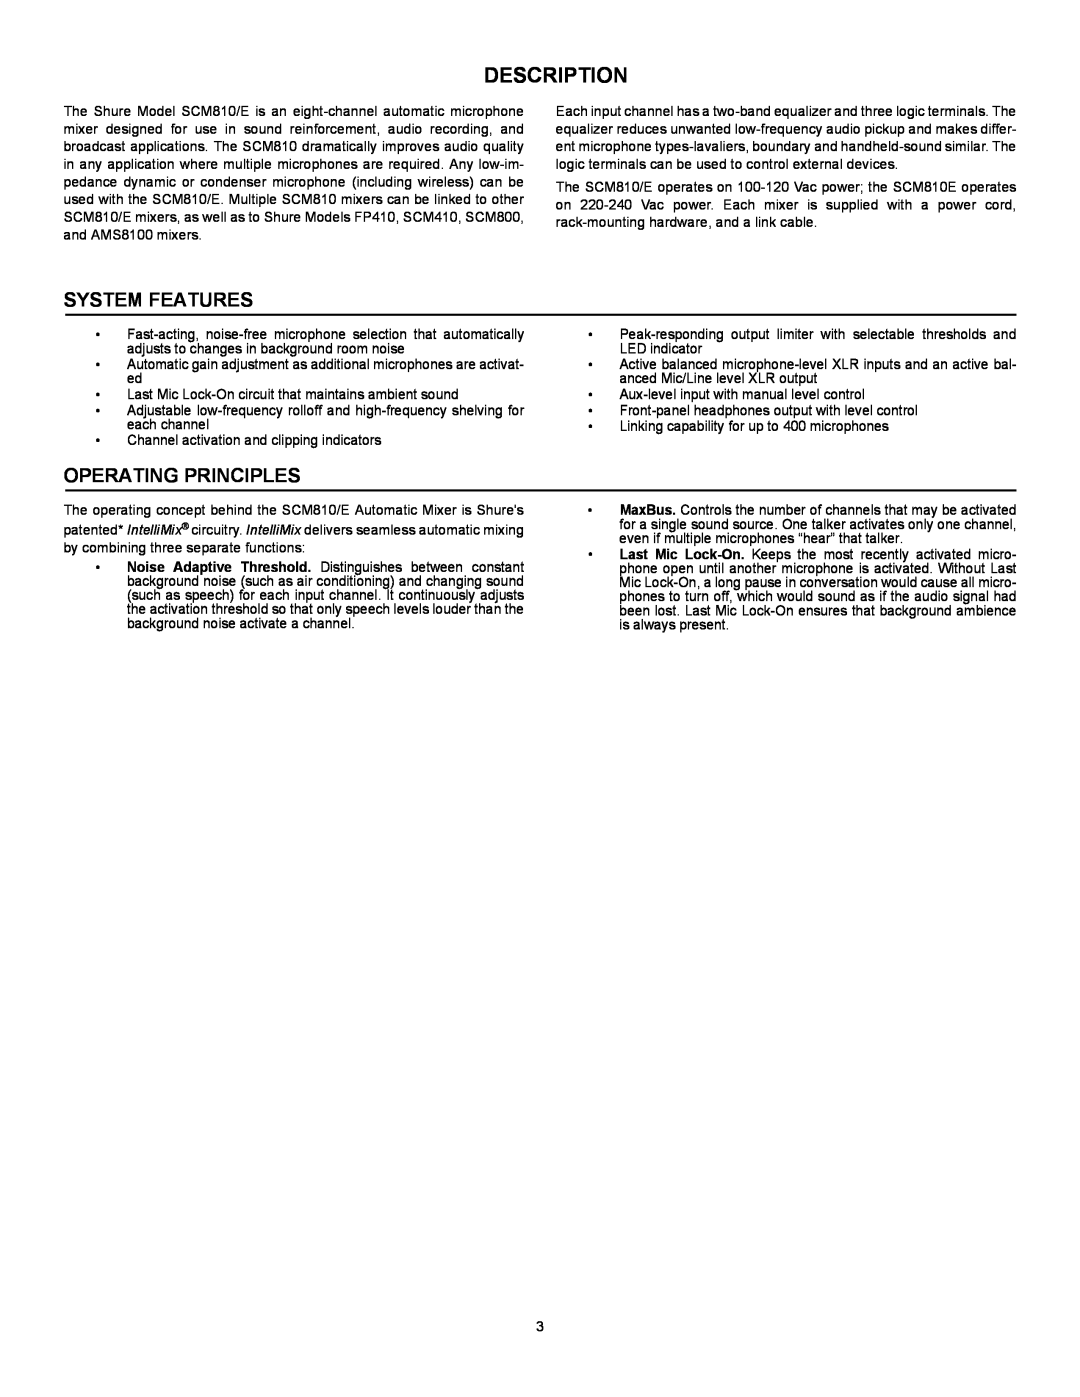 Shure SCM810 manual Description, System Features, Operating Principles 